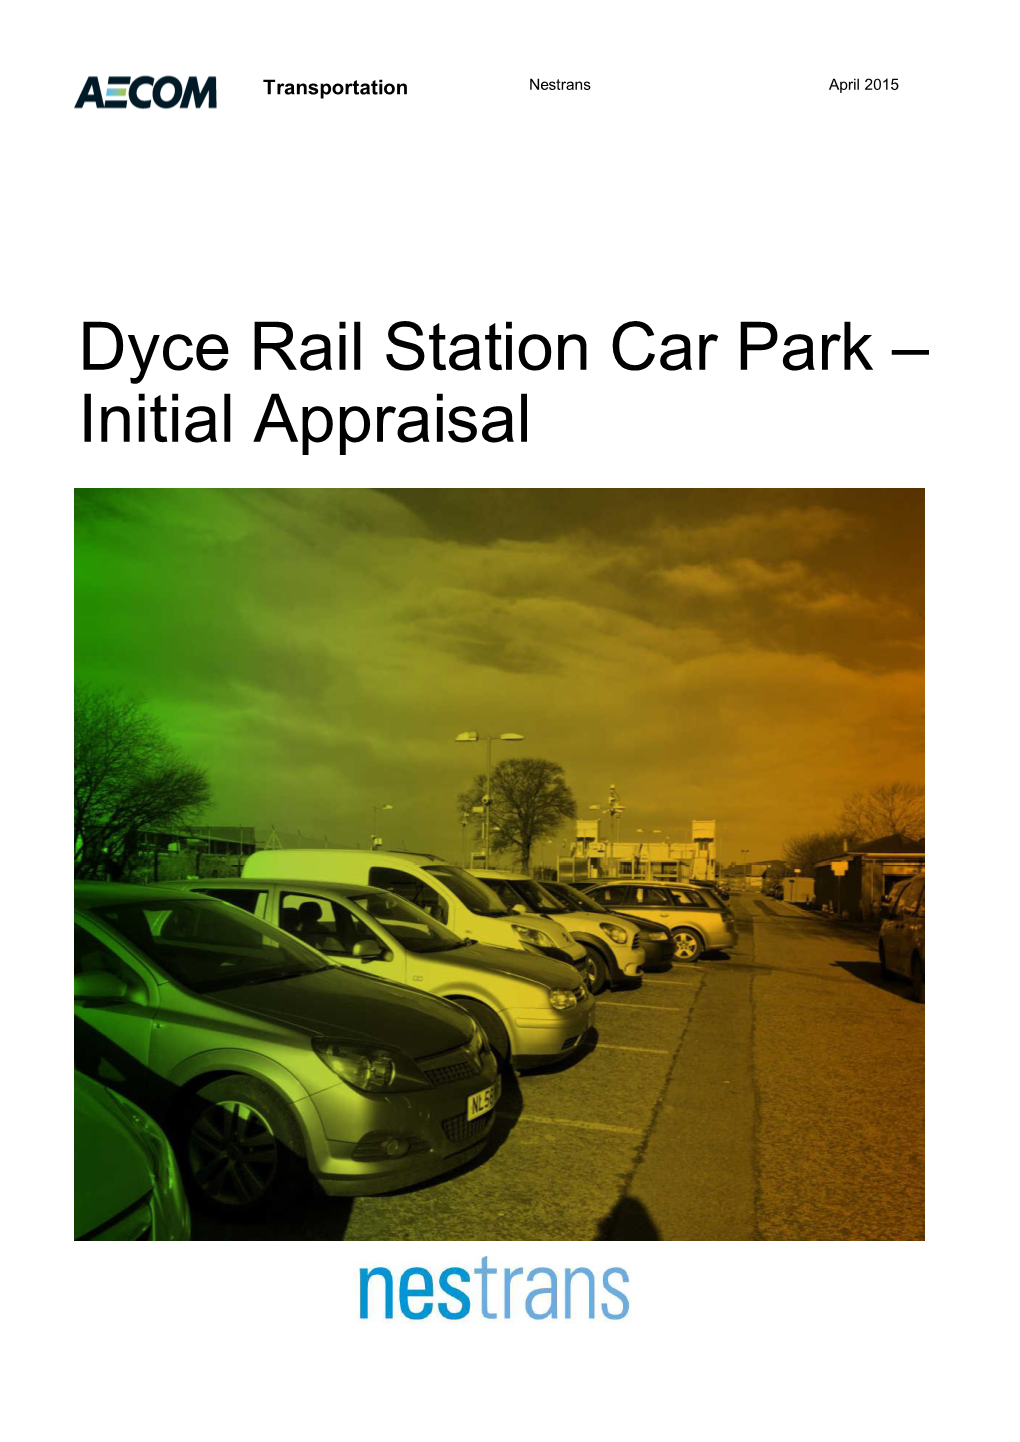 Dyce Station Car Park Extension Consultation Process